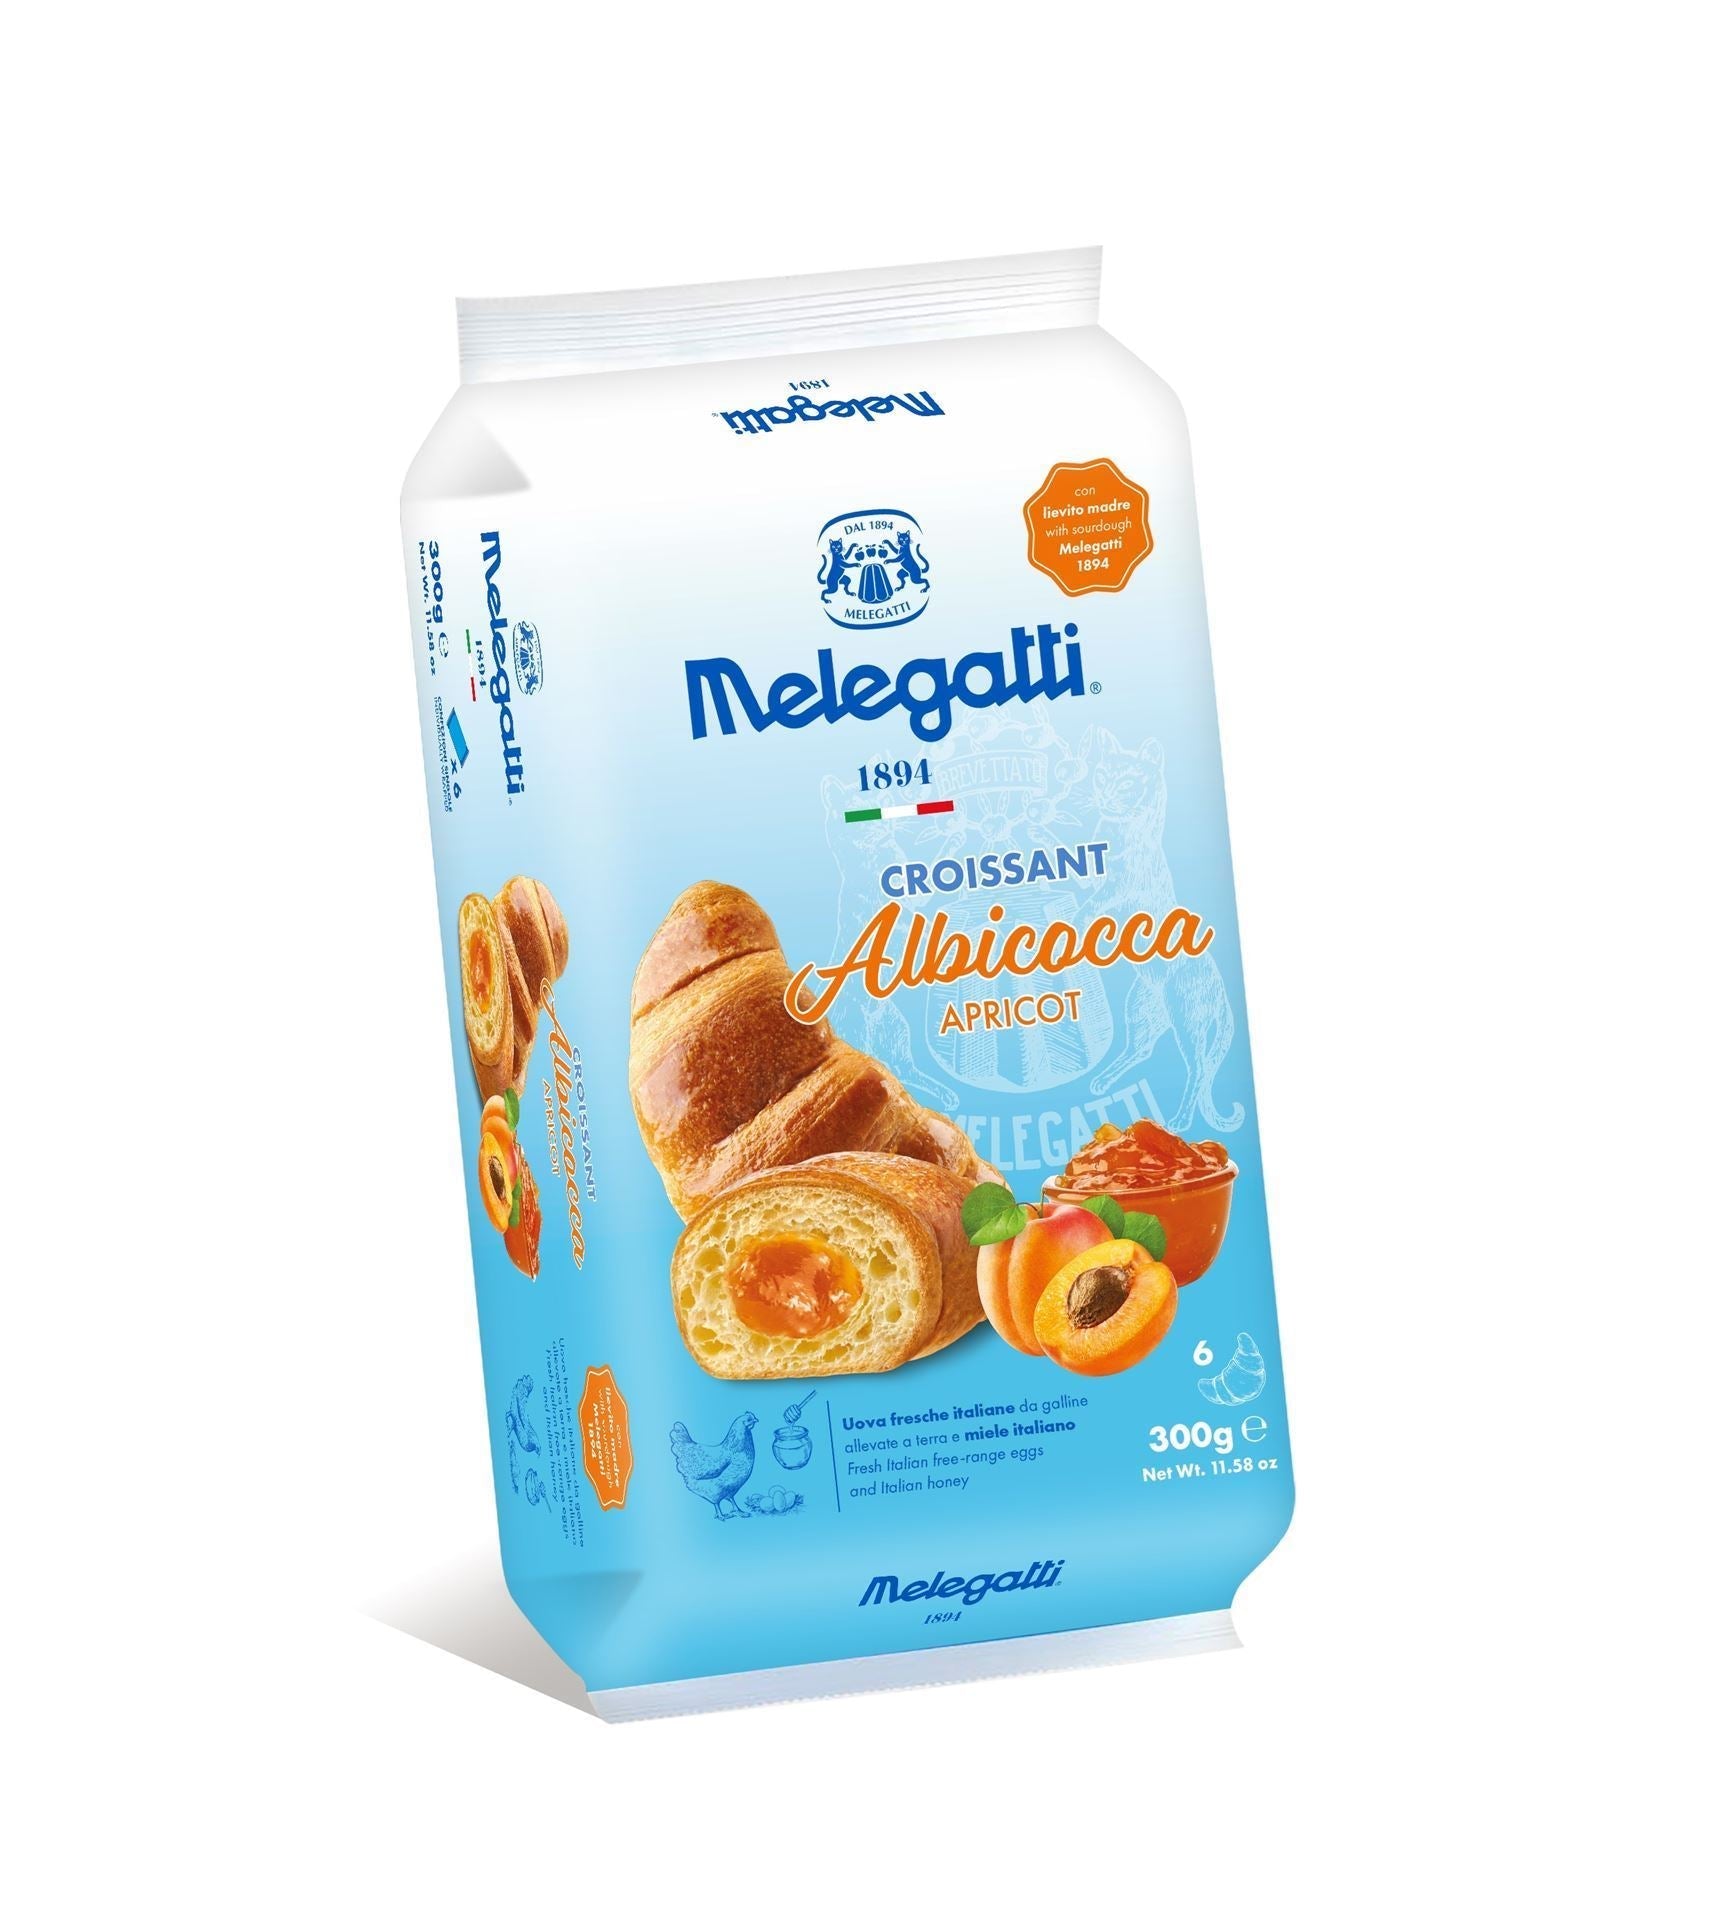 Melegatti Croissant stuffed at Albicocca 6 x50gr